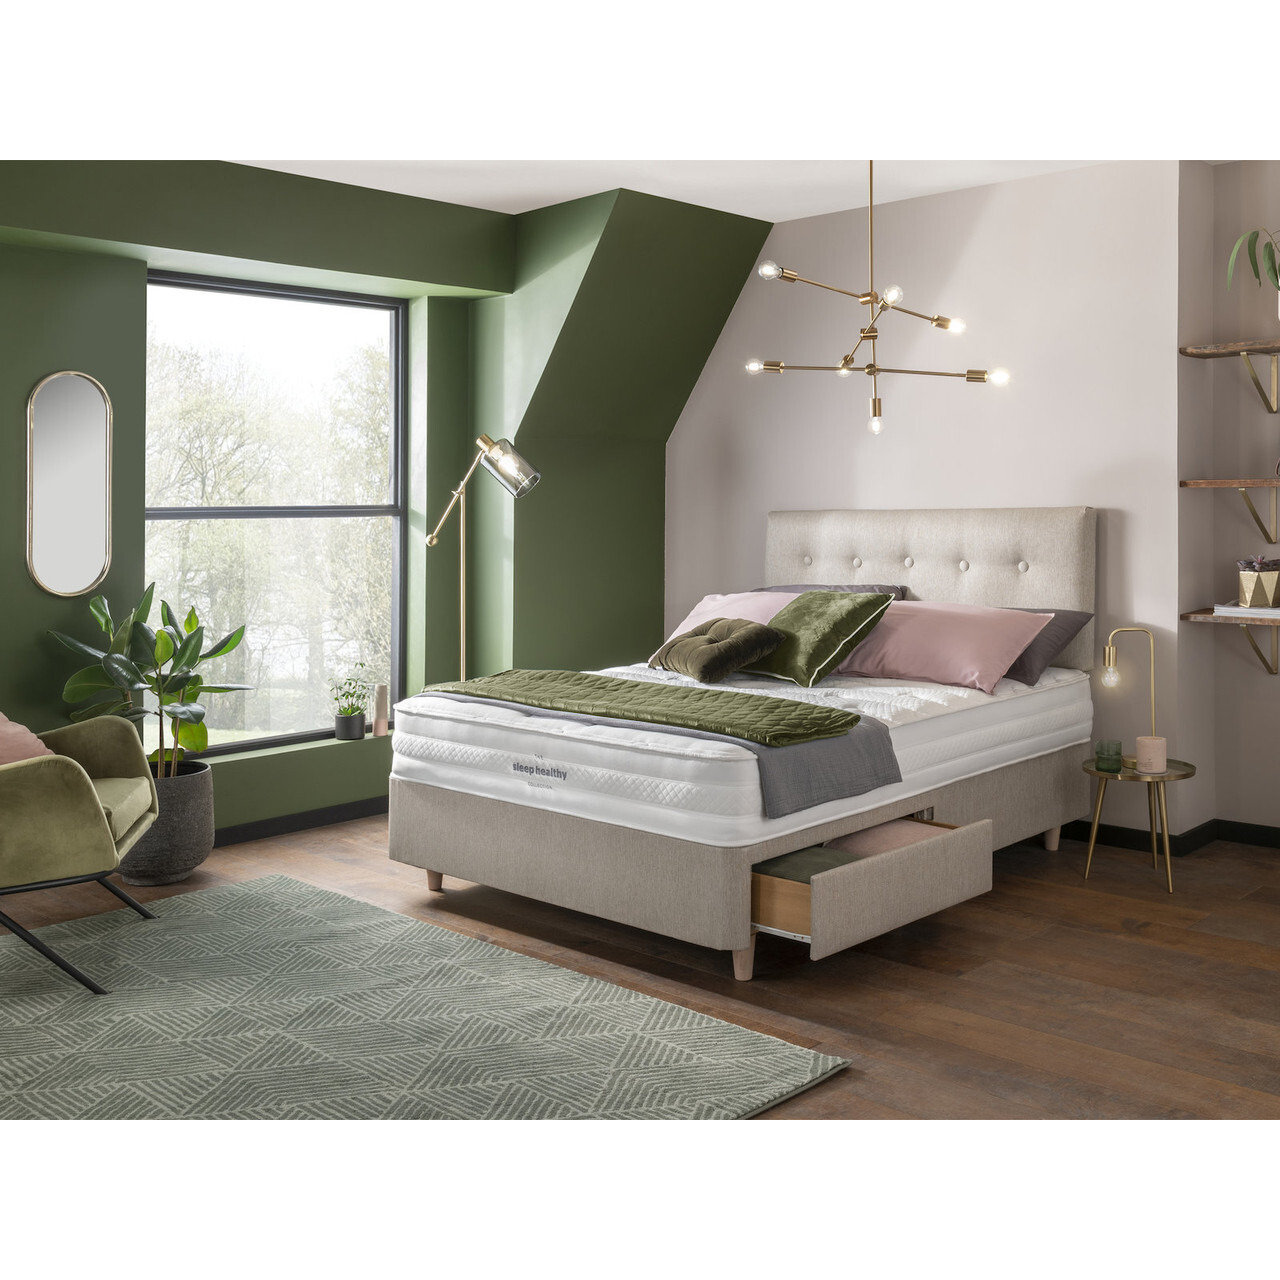 Silentnight Sleep Healthy Eco 600 Divan Bed Set On Legs - image 1